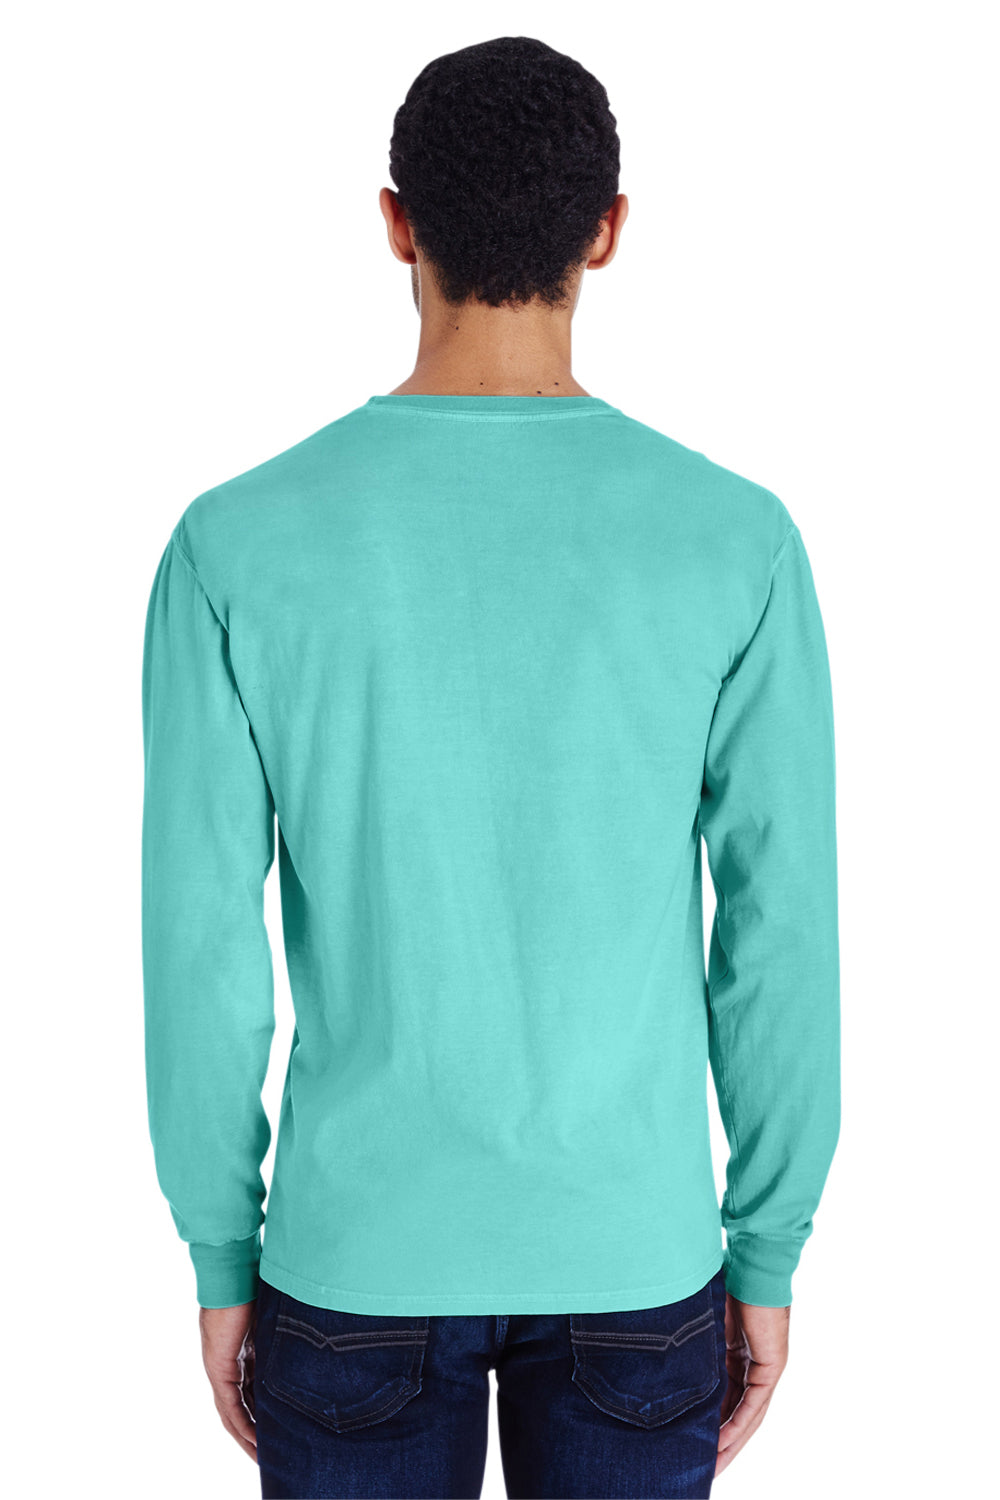 ComfortWash By Hanes GDH250 Mens Long Sleeve Crewneck T-Shirt w/ Pocket Mint Green Back